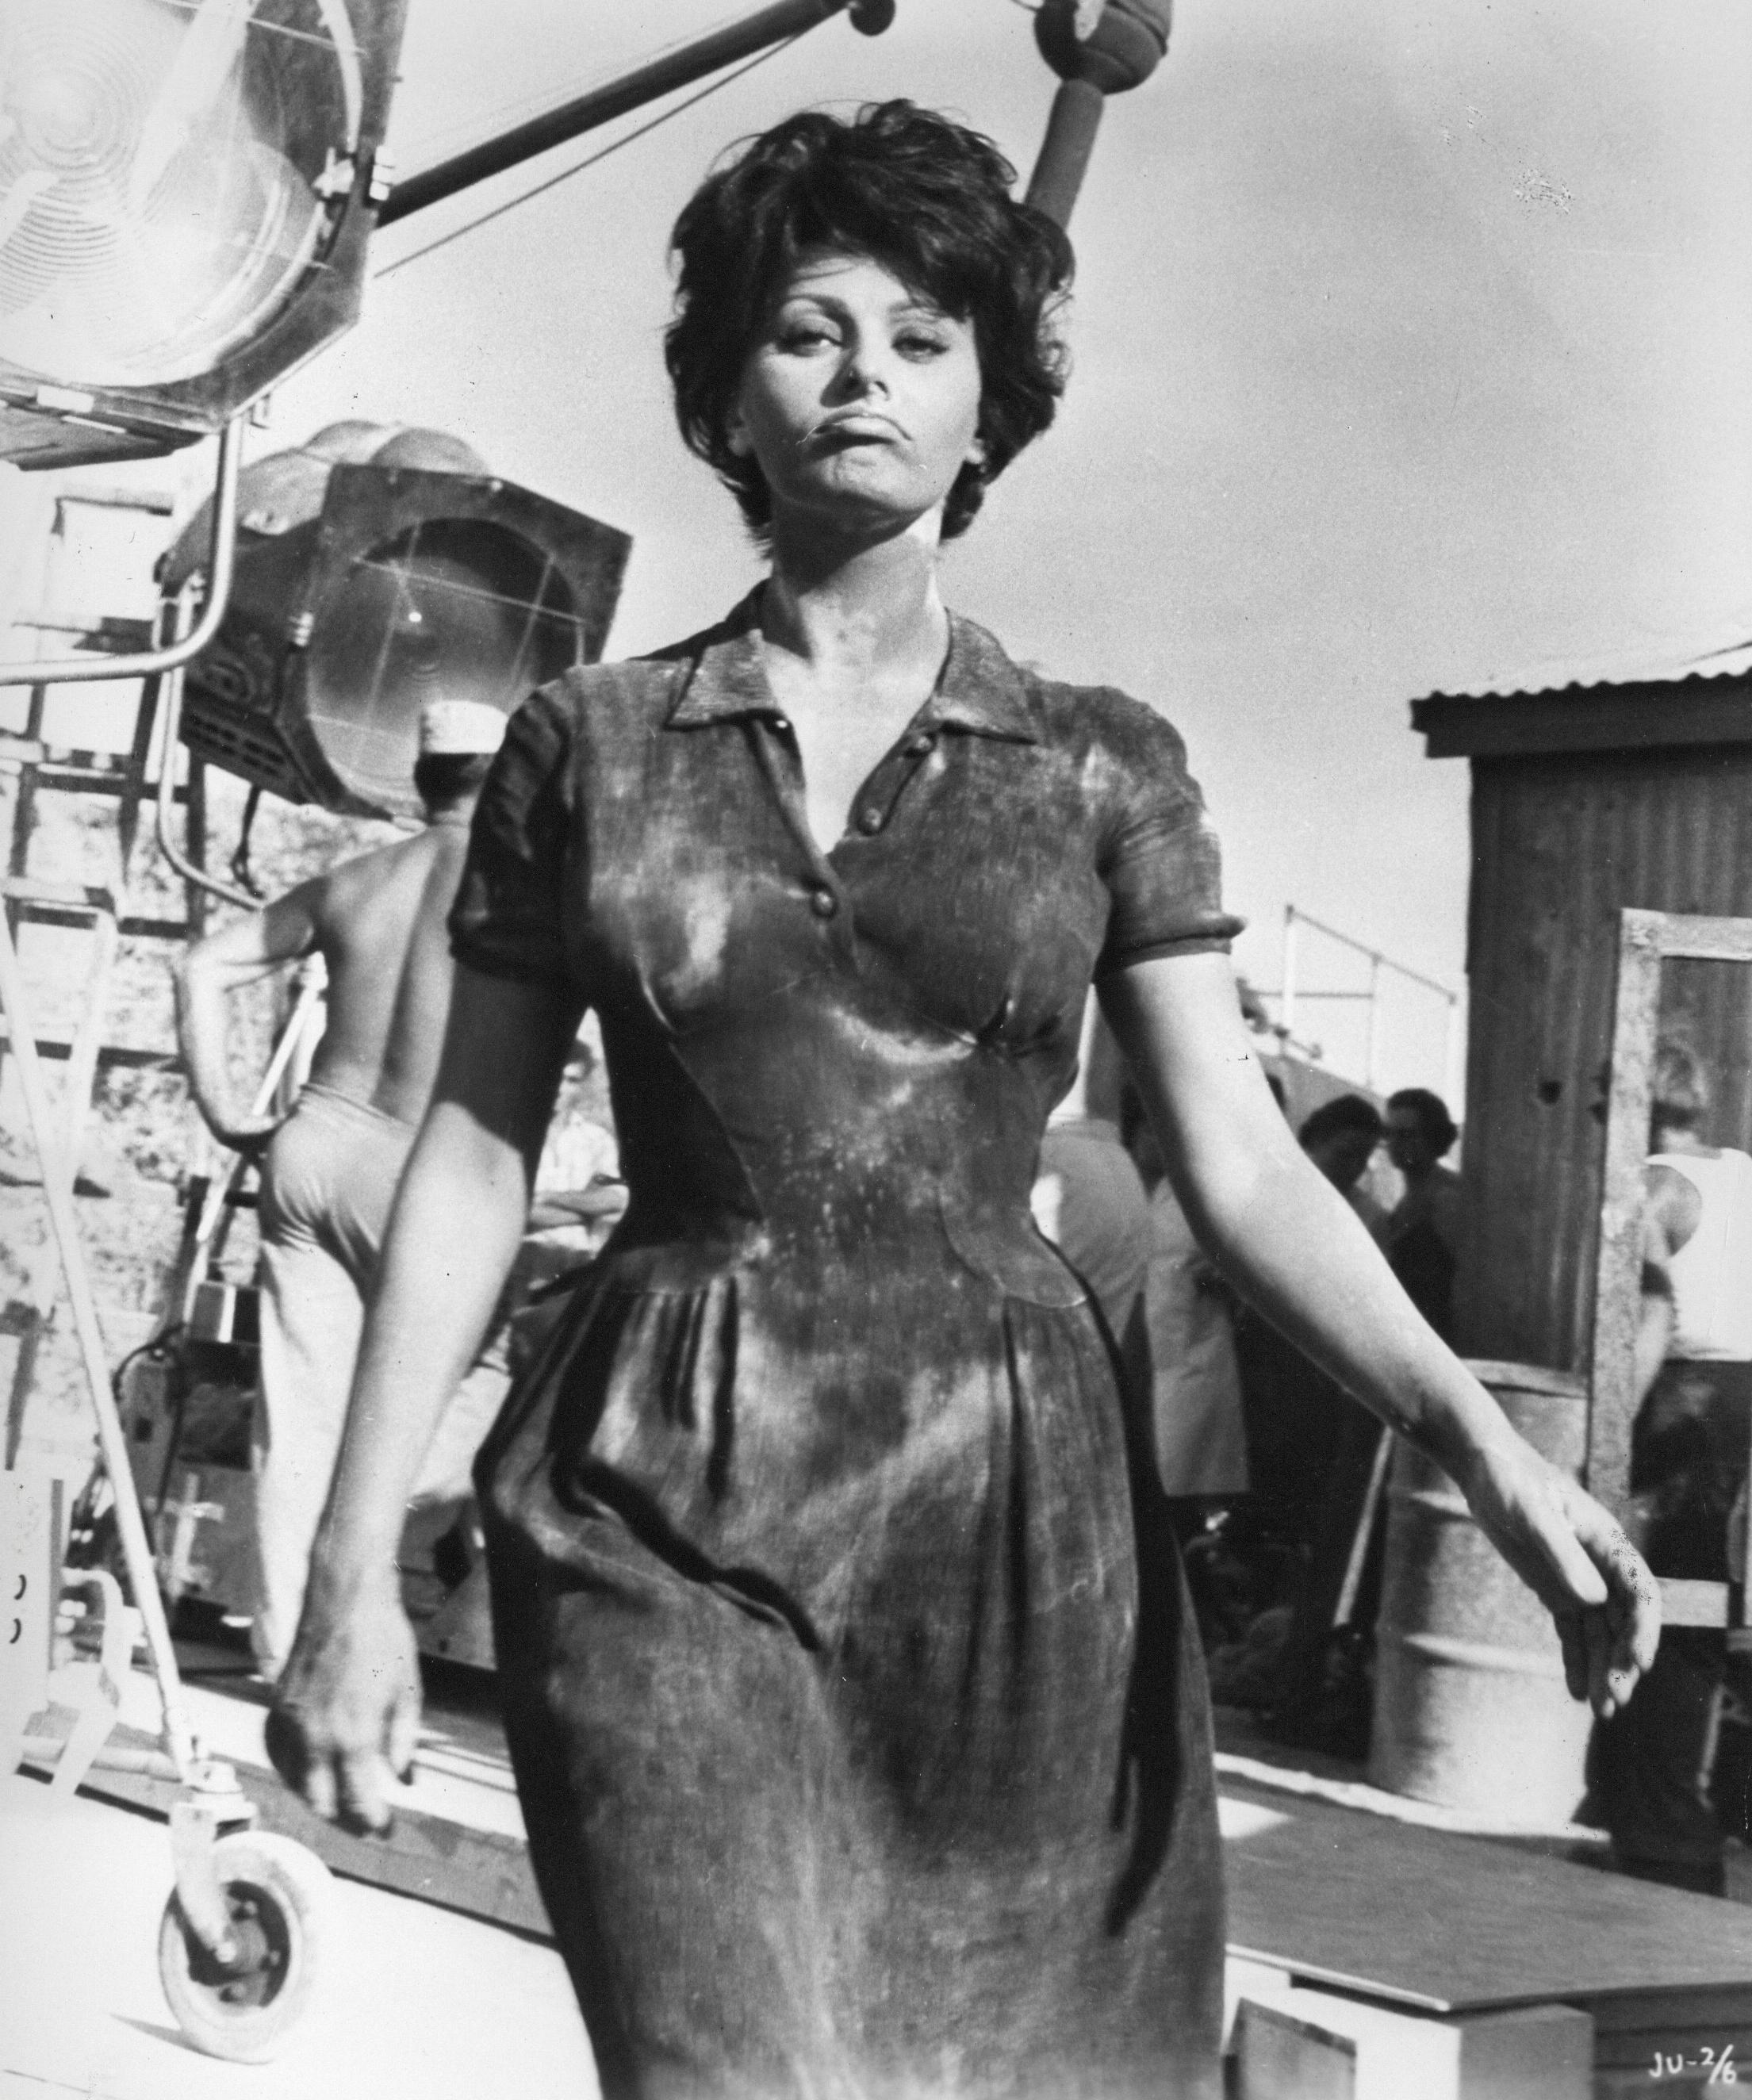 Anthony J. Orso Black and White Photograph - Sophia Loren in "Judith" Vintage Original Photograph